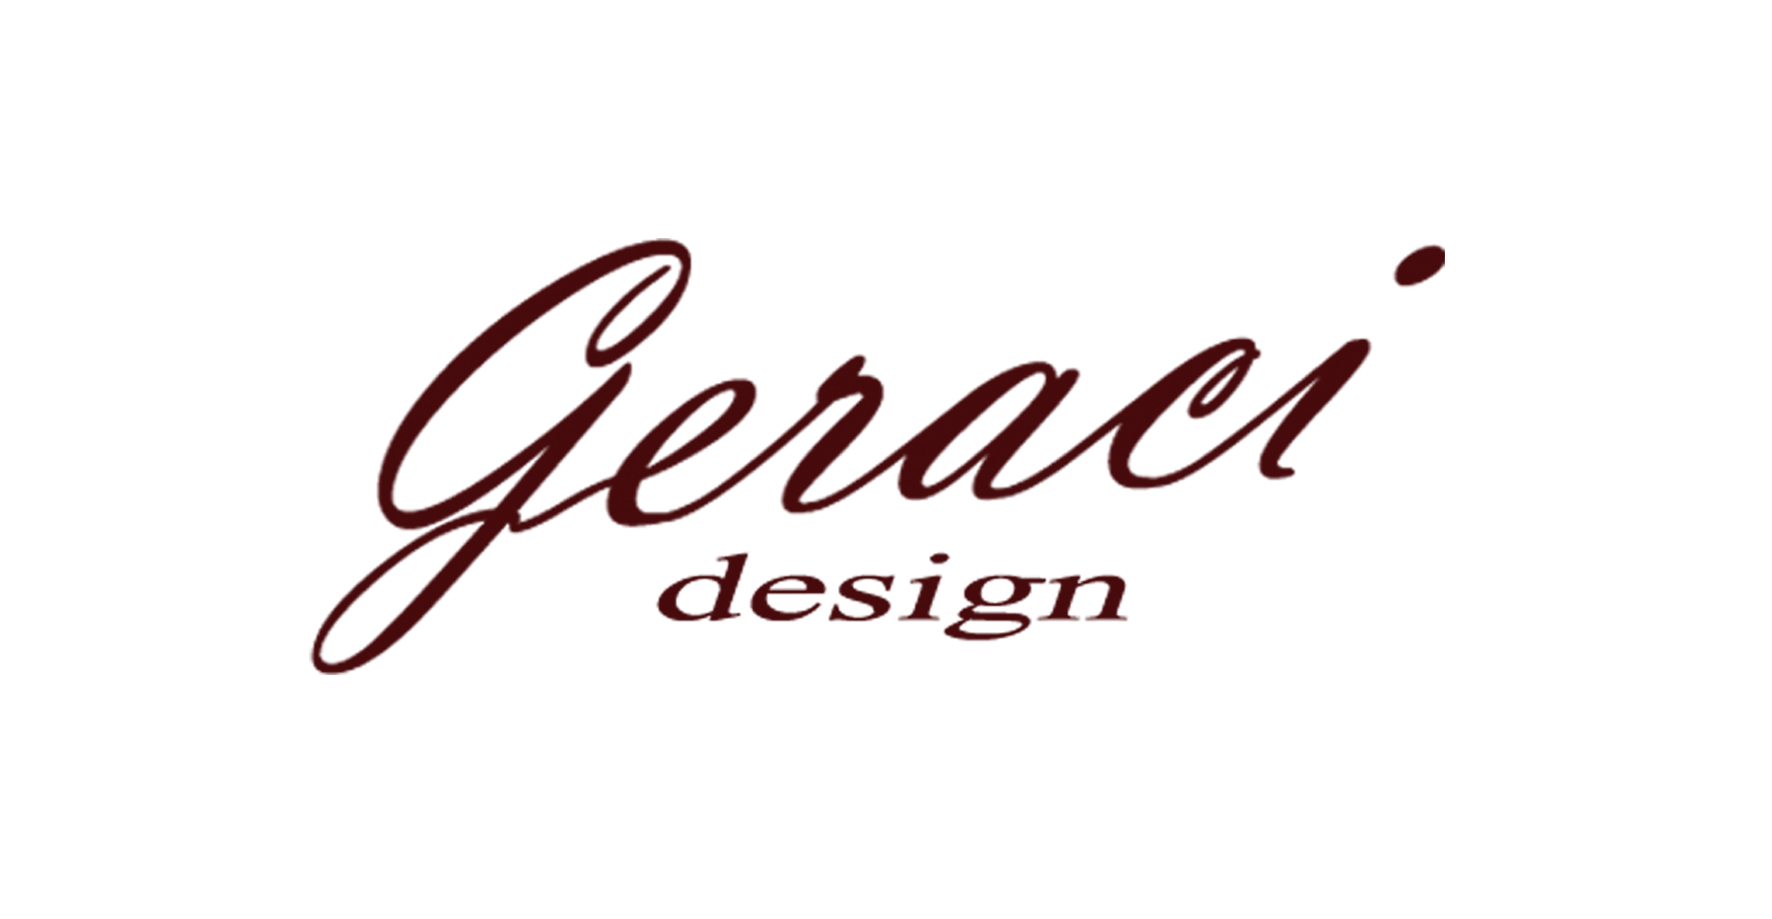 Geraci design store